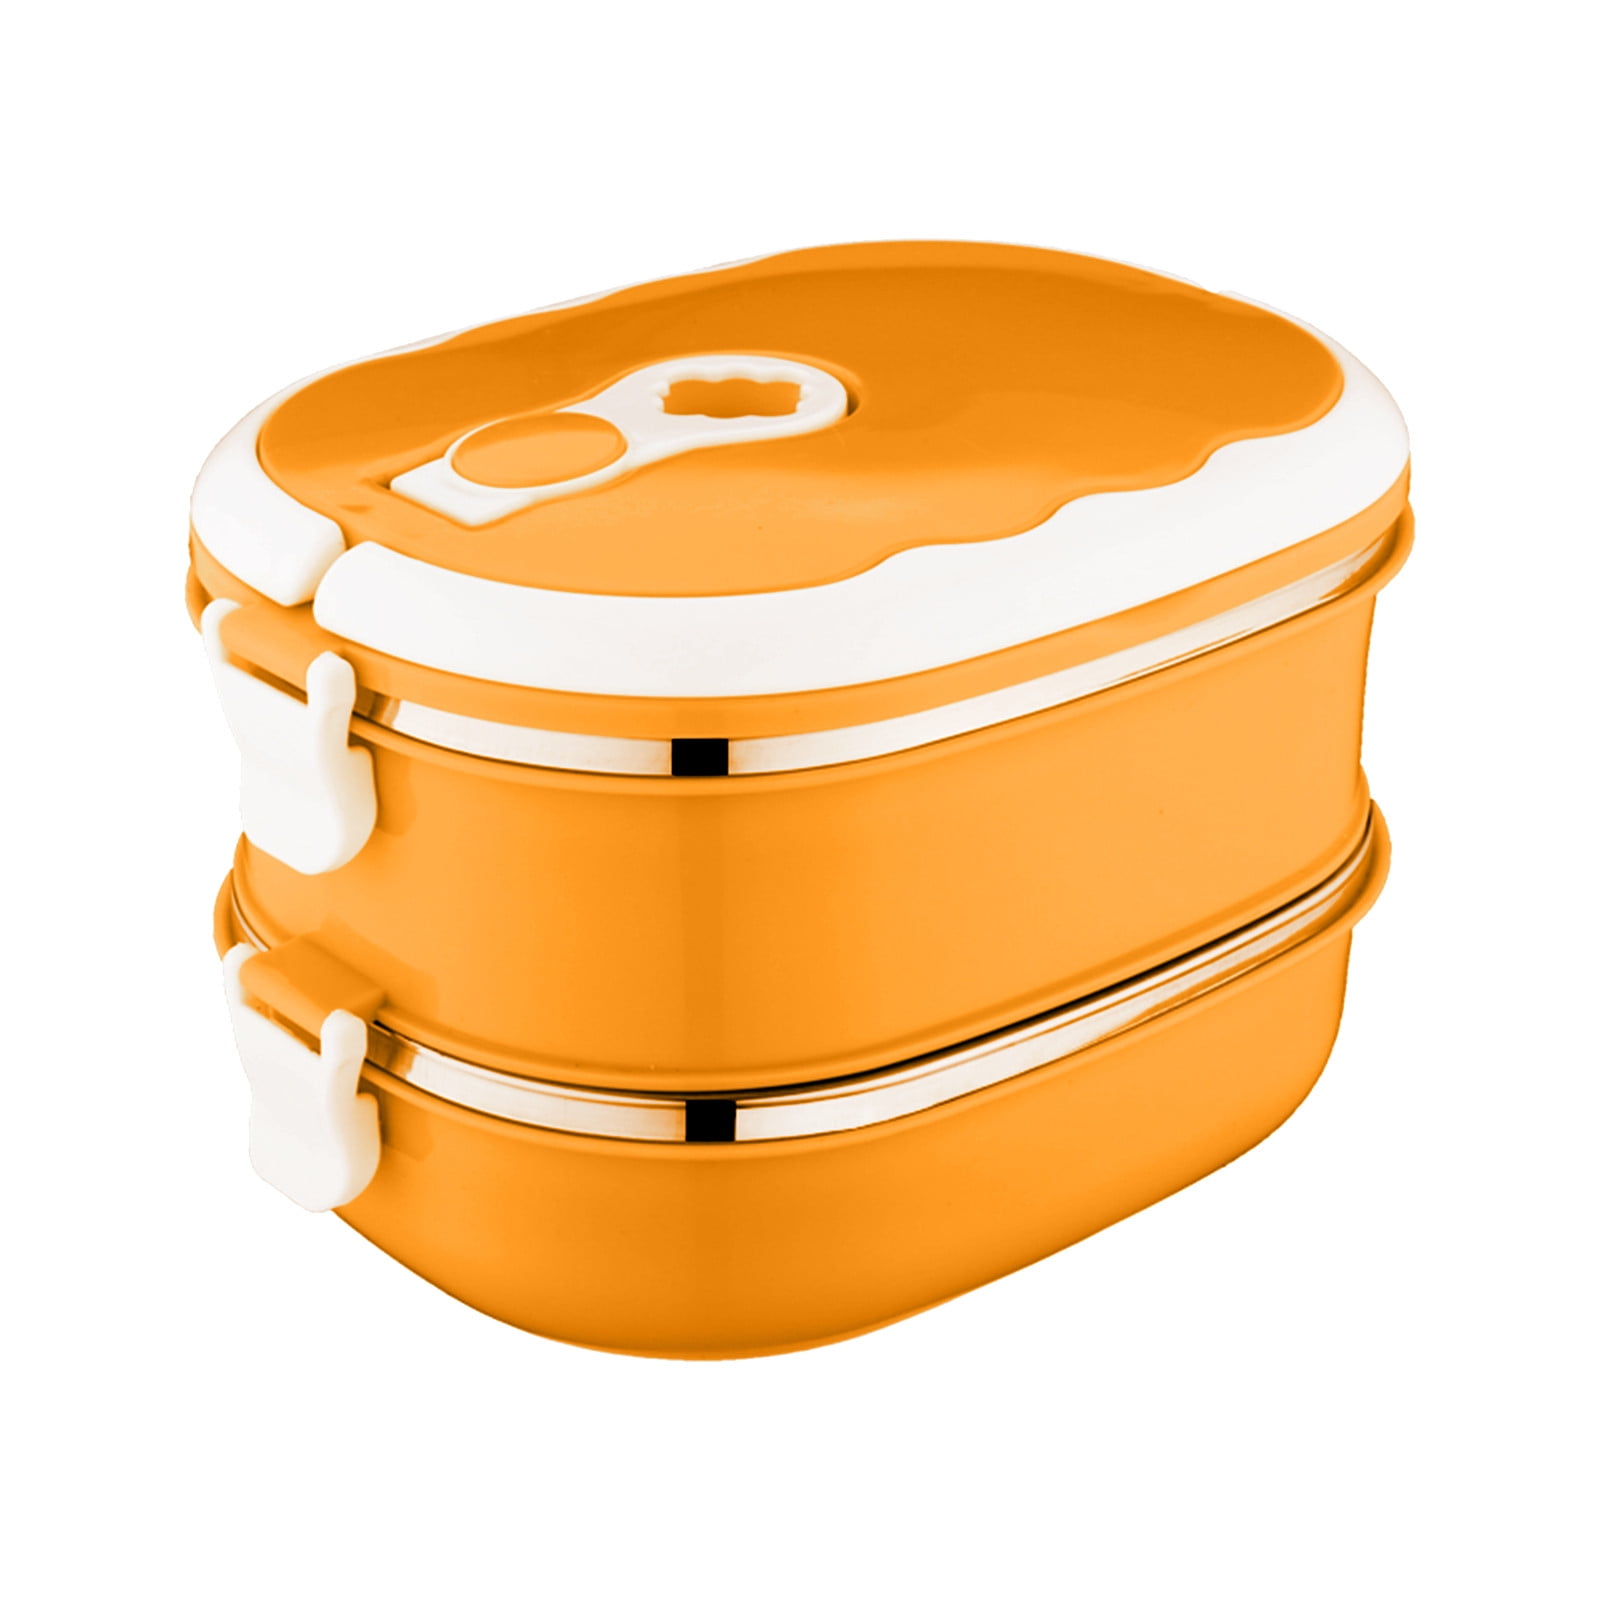 ESULOMP 2-layer 1800ml Rectangular Food Lunch Box Stainless Steel